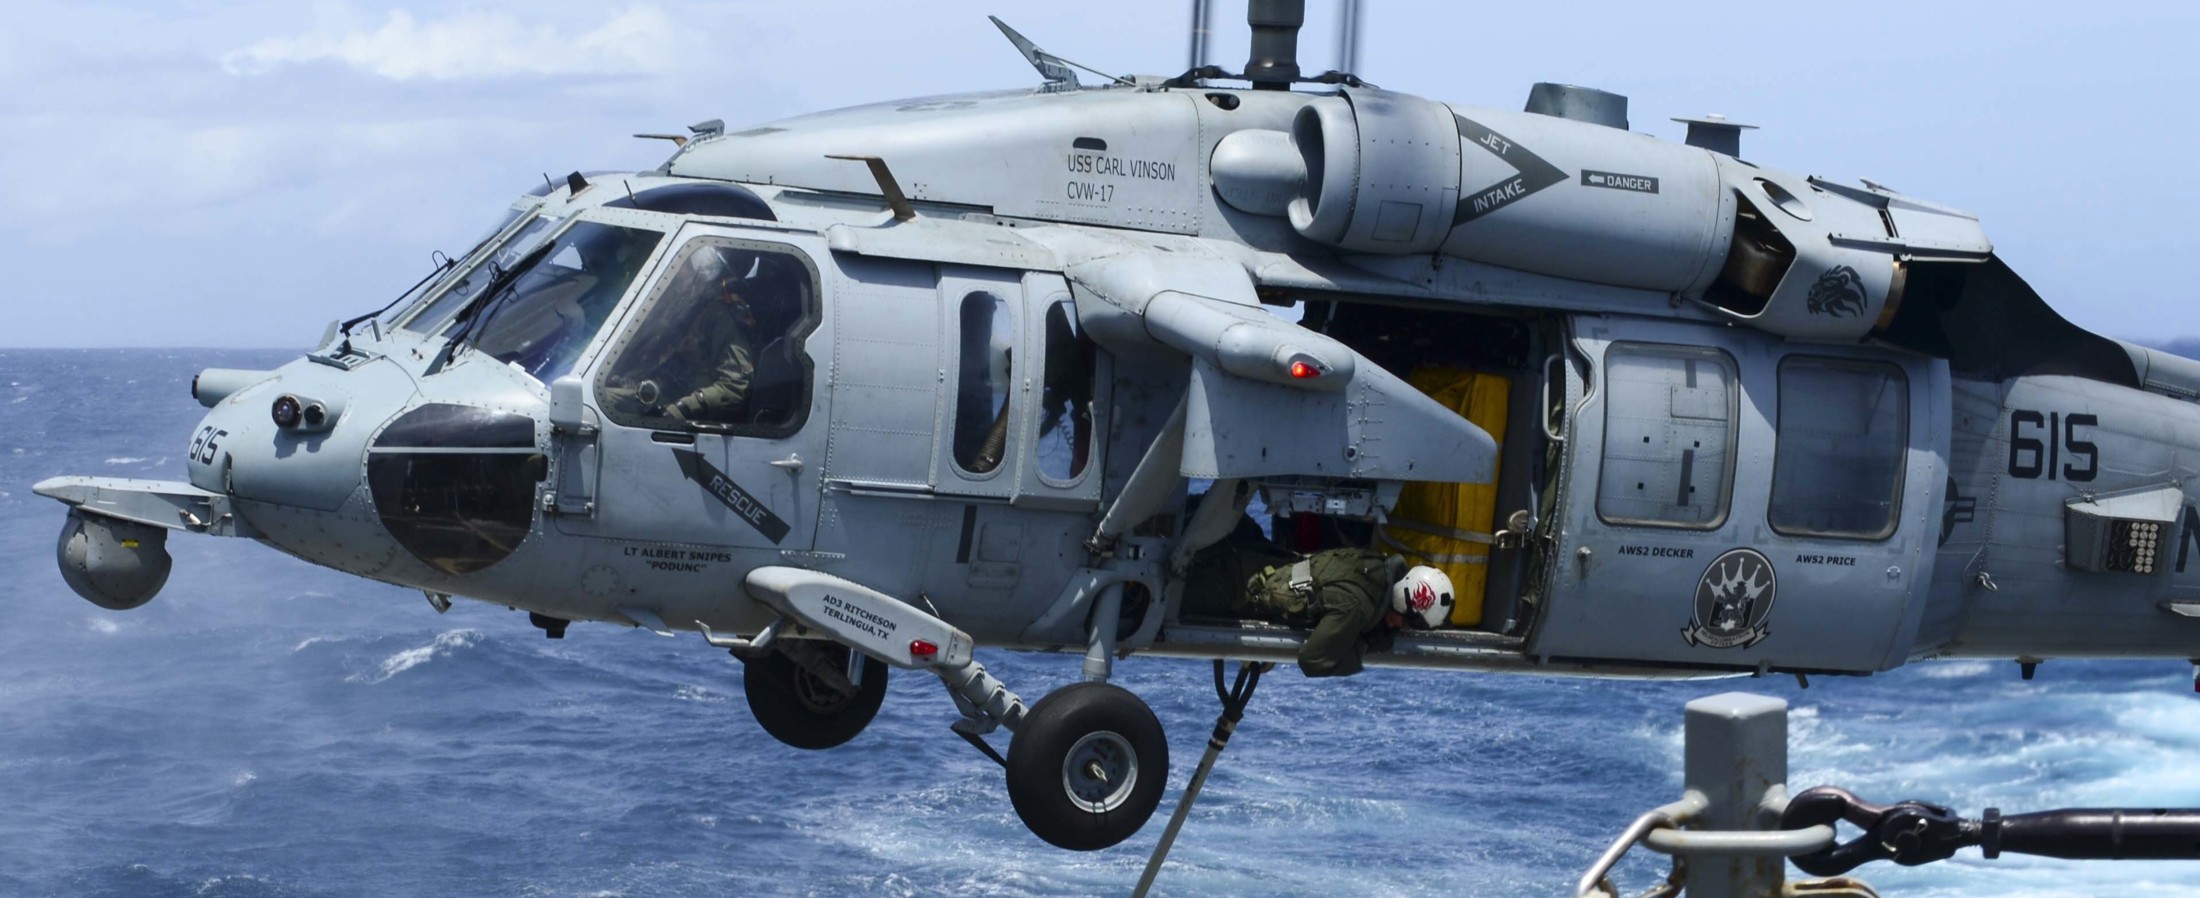 hsc-15 red lions helicopter sea combat squadron us navy mh-60s seahawk cvw-17 uss carl vinson cvn-70 80